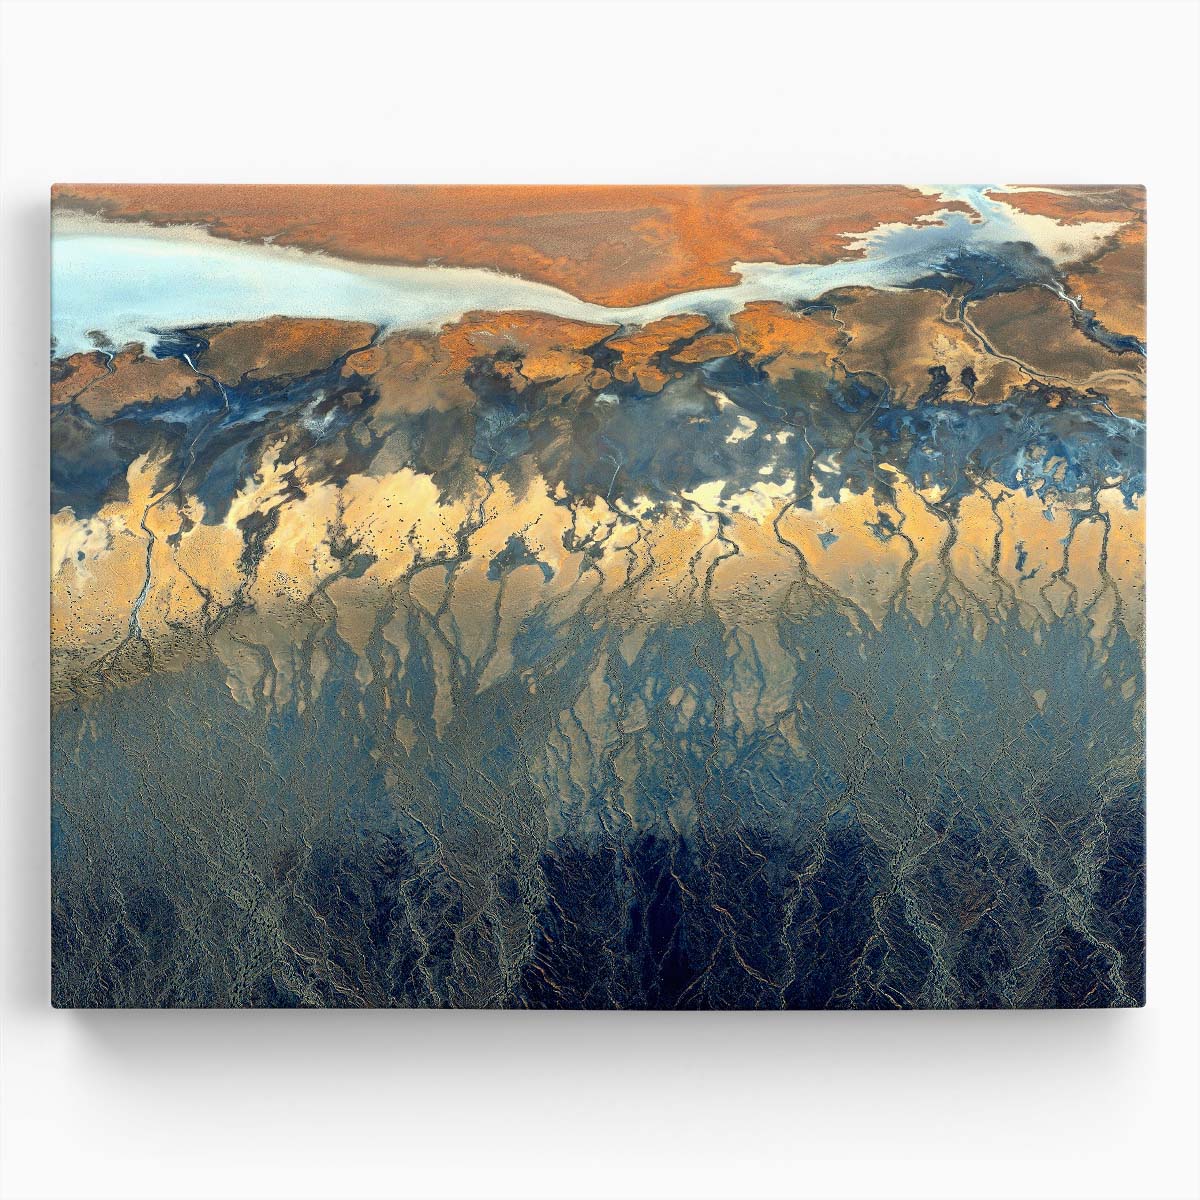 Death Valley Aerial Desert Veins Landscape Wall Art by Luxuriance Designs. Made in USA.